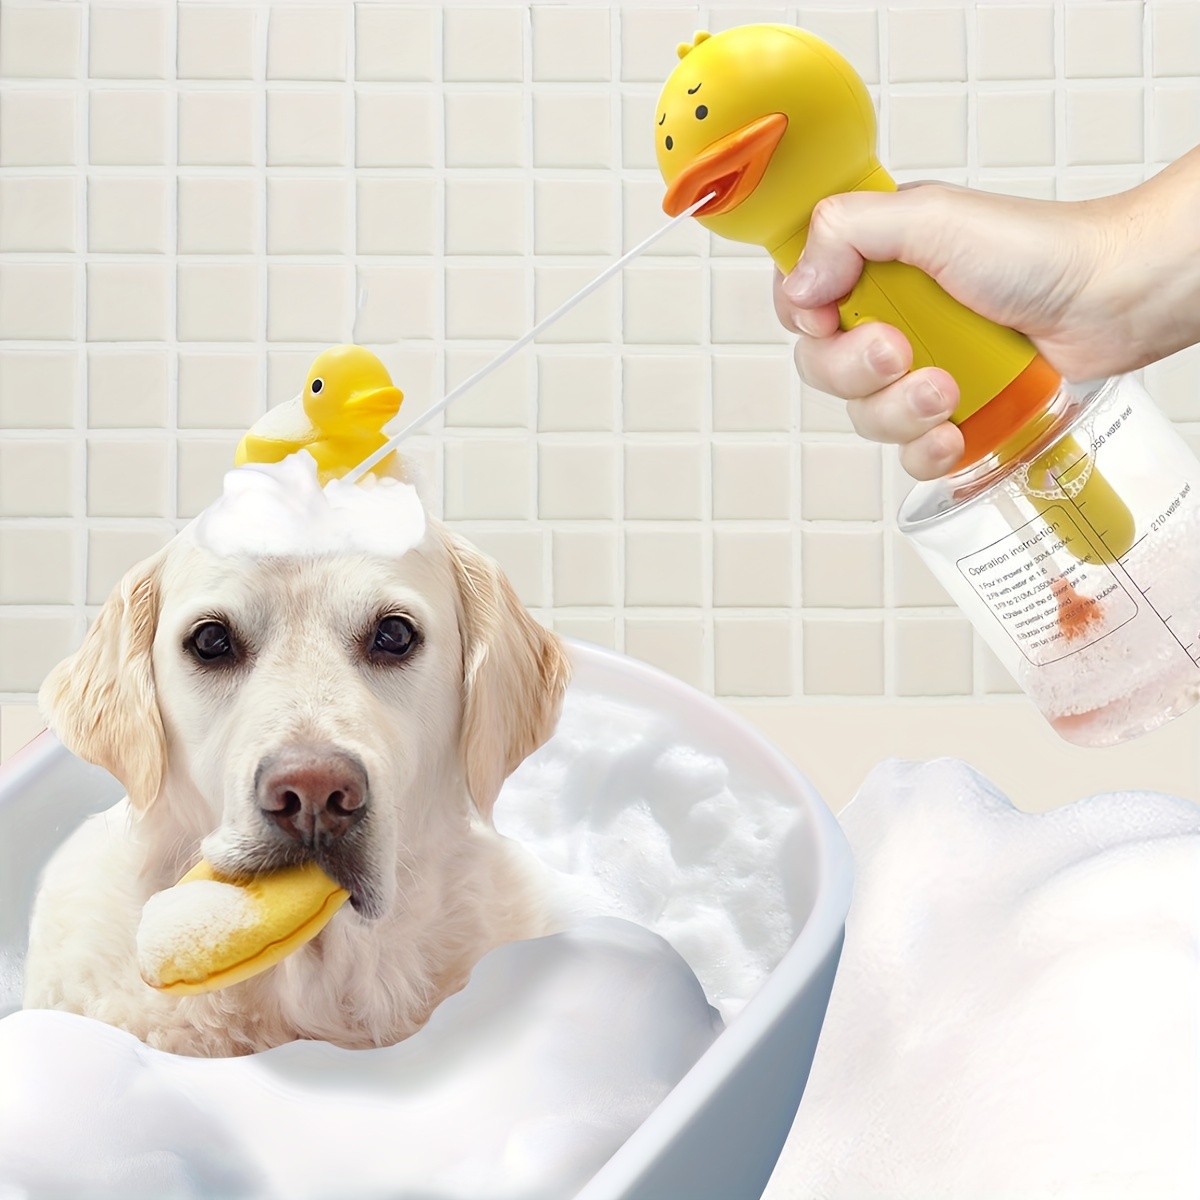 

Duck-shaped Pet Foaming Bath Dispenser, Intelligent 1:6 Ratio Foam Maker, Salon-level Spa Care, Gentle Skin-safe Bathing Tool, Multi-purpose Use For Dogs And Home Spa